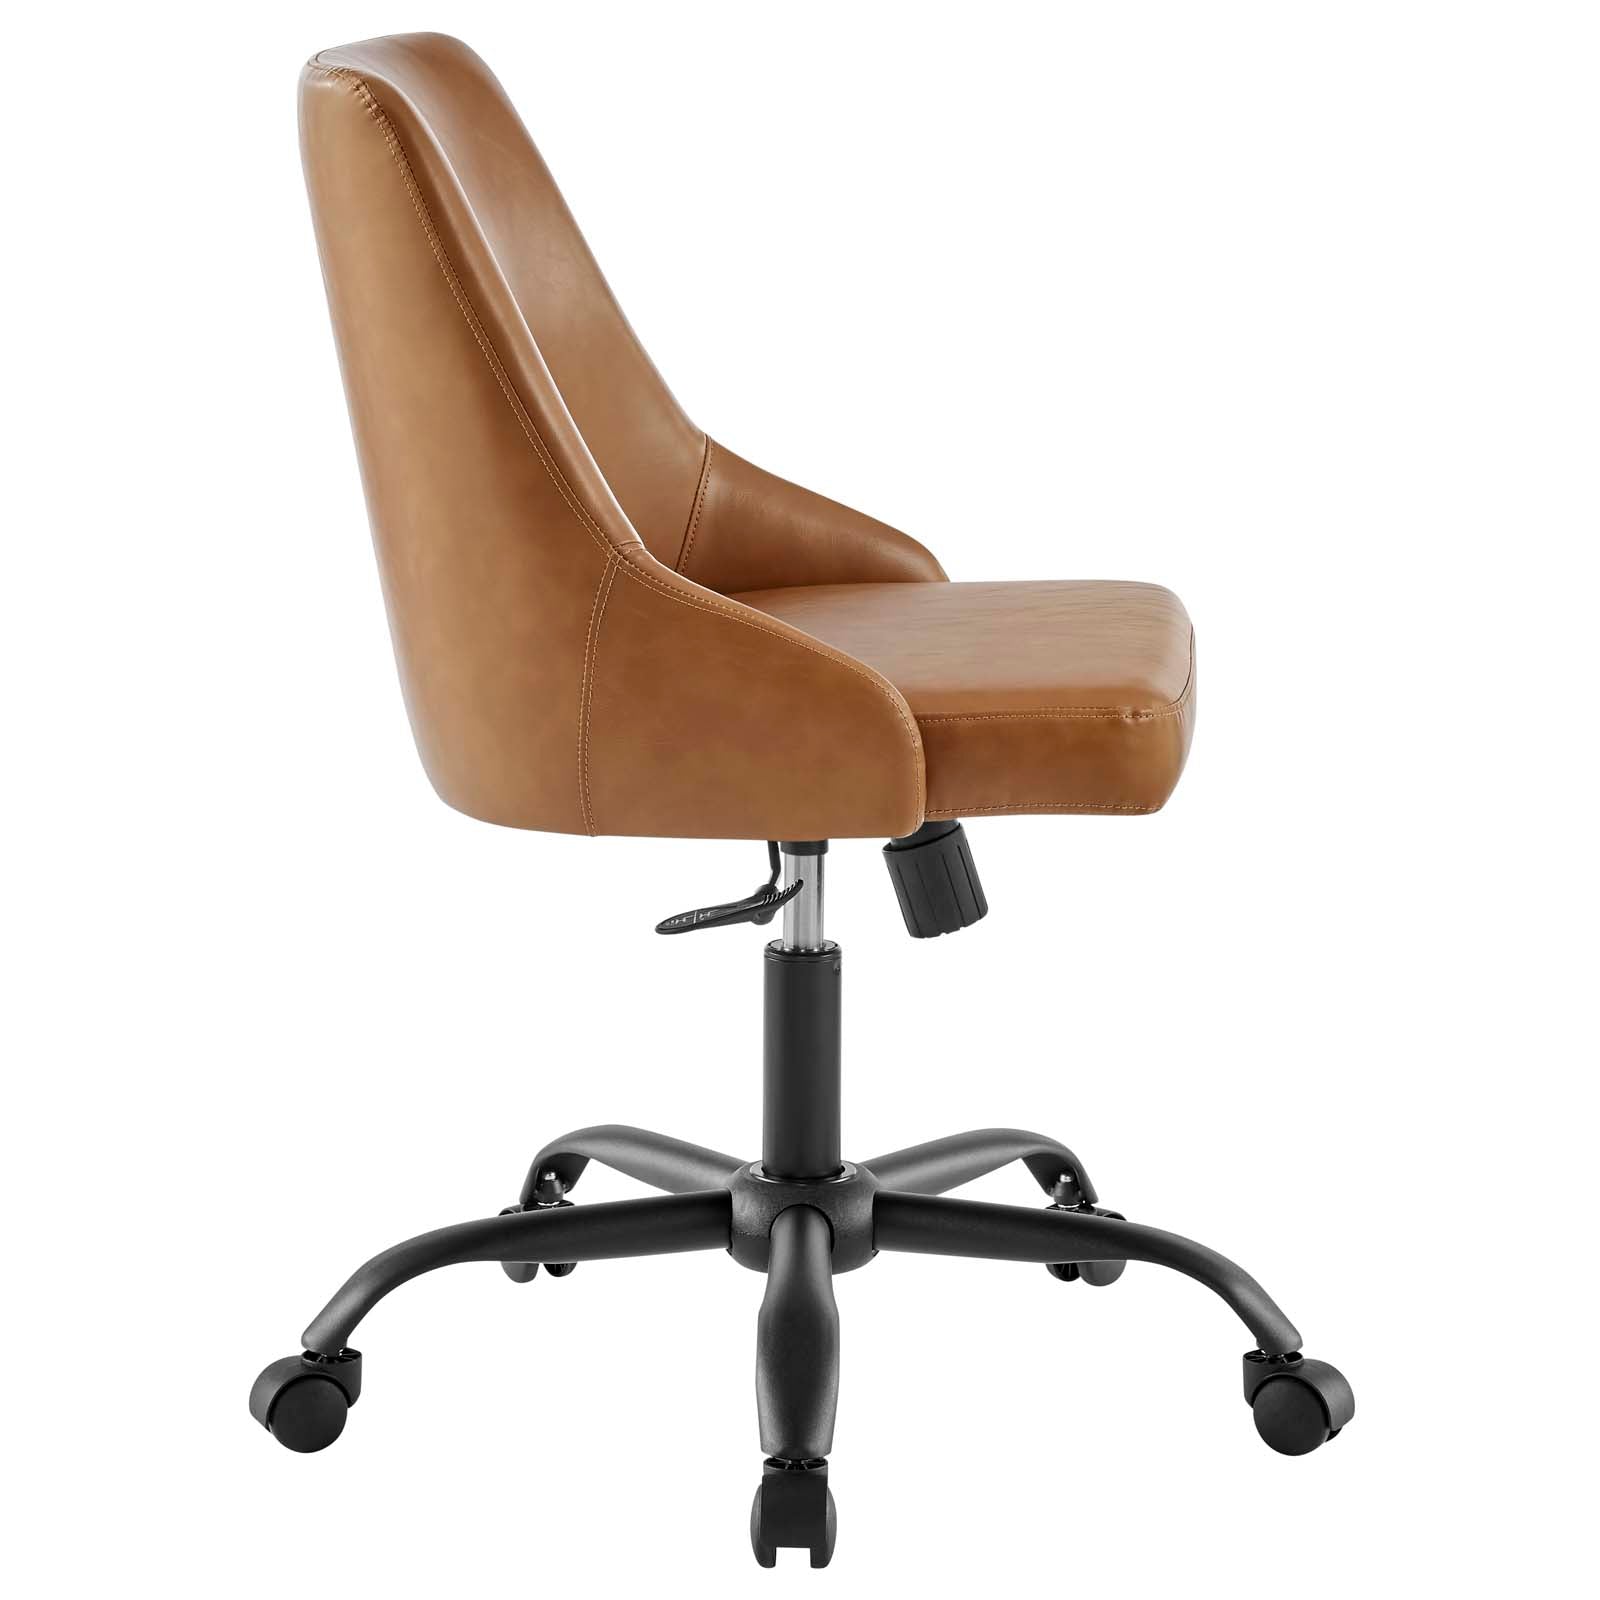 Designate Swivel Vegan Leather Office Chair - East Shore Modern Home Furnishings